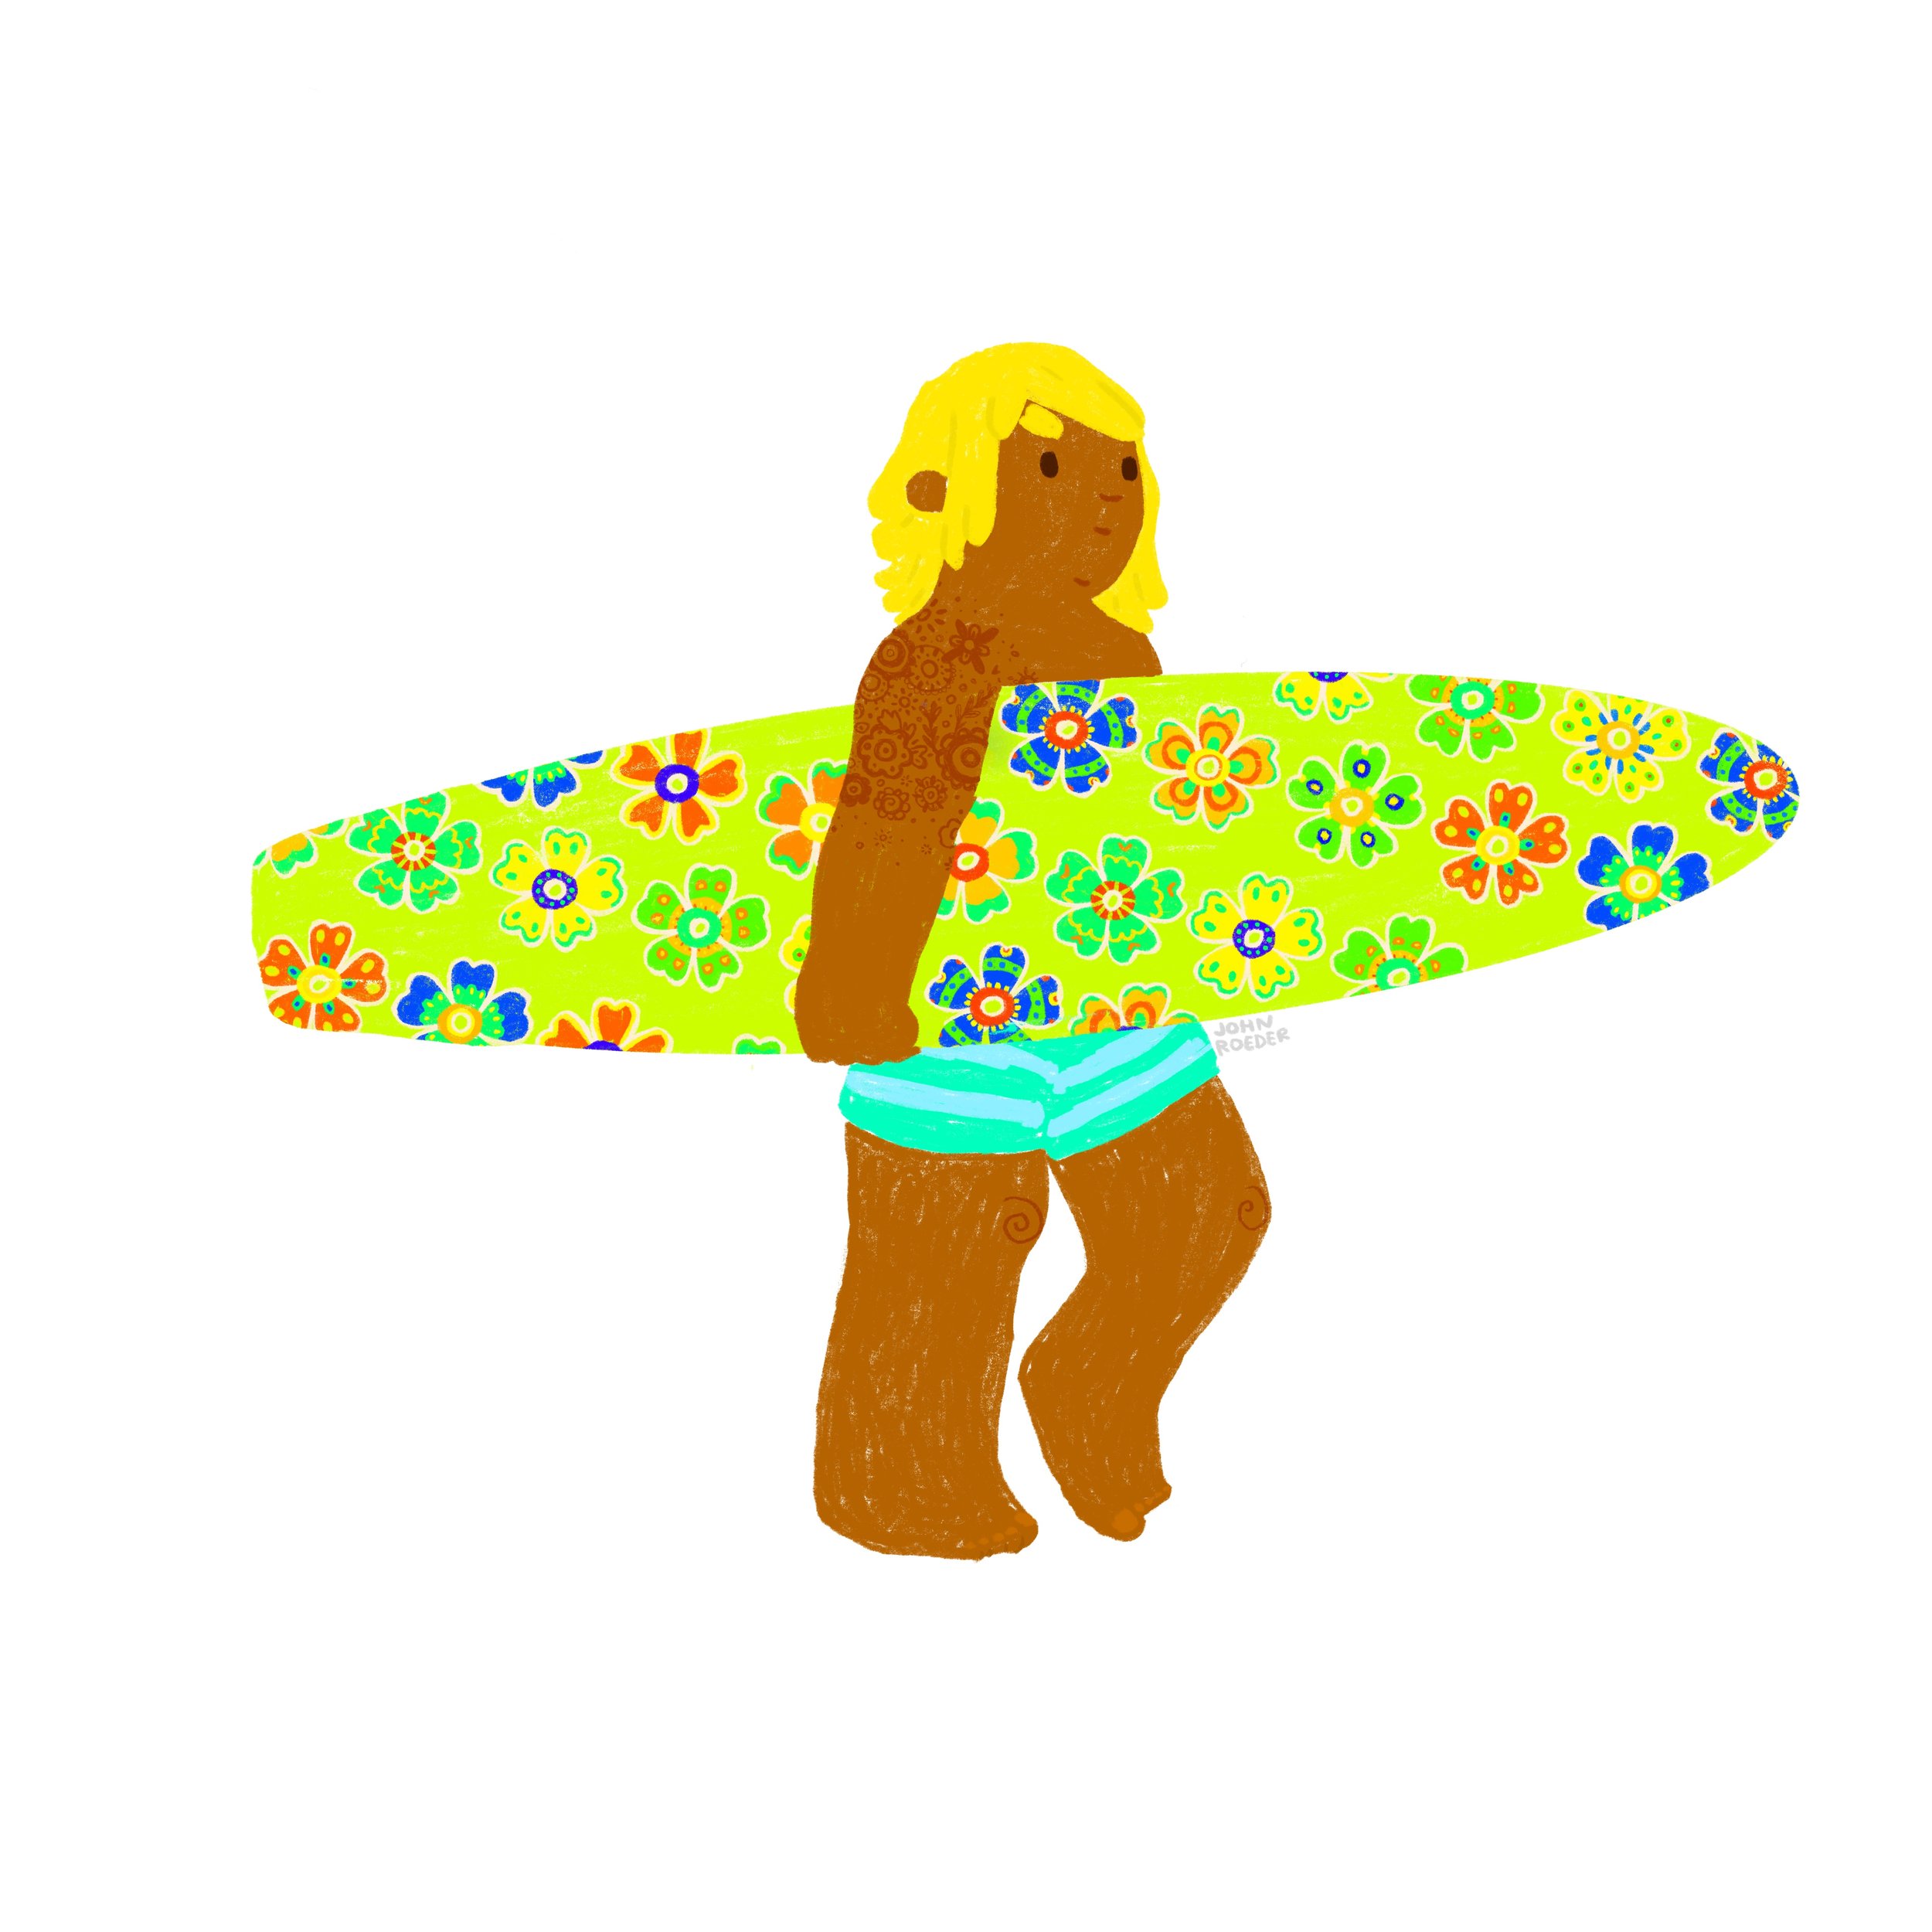 Surf_Character_.jpg